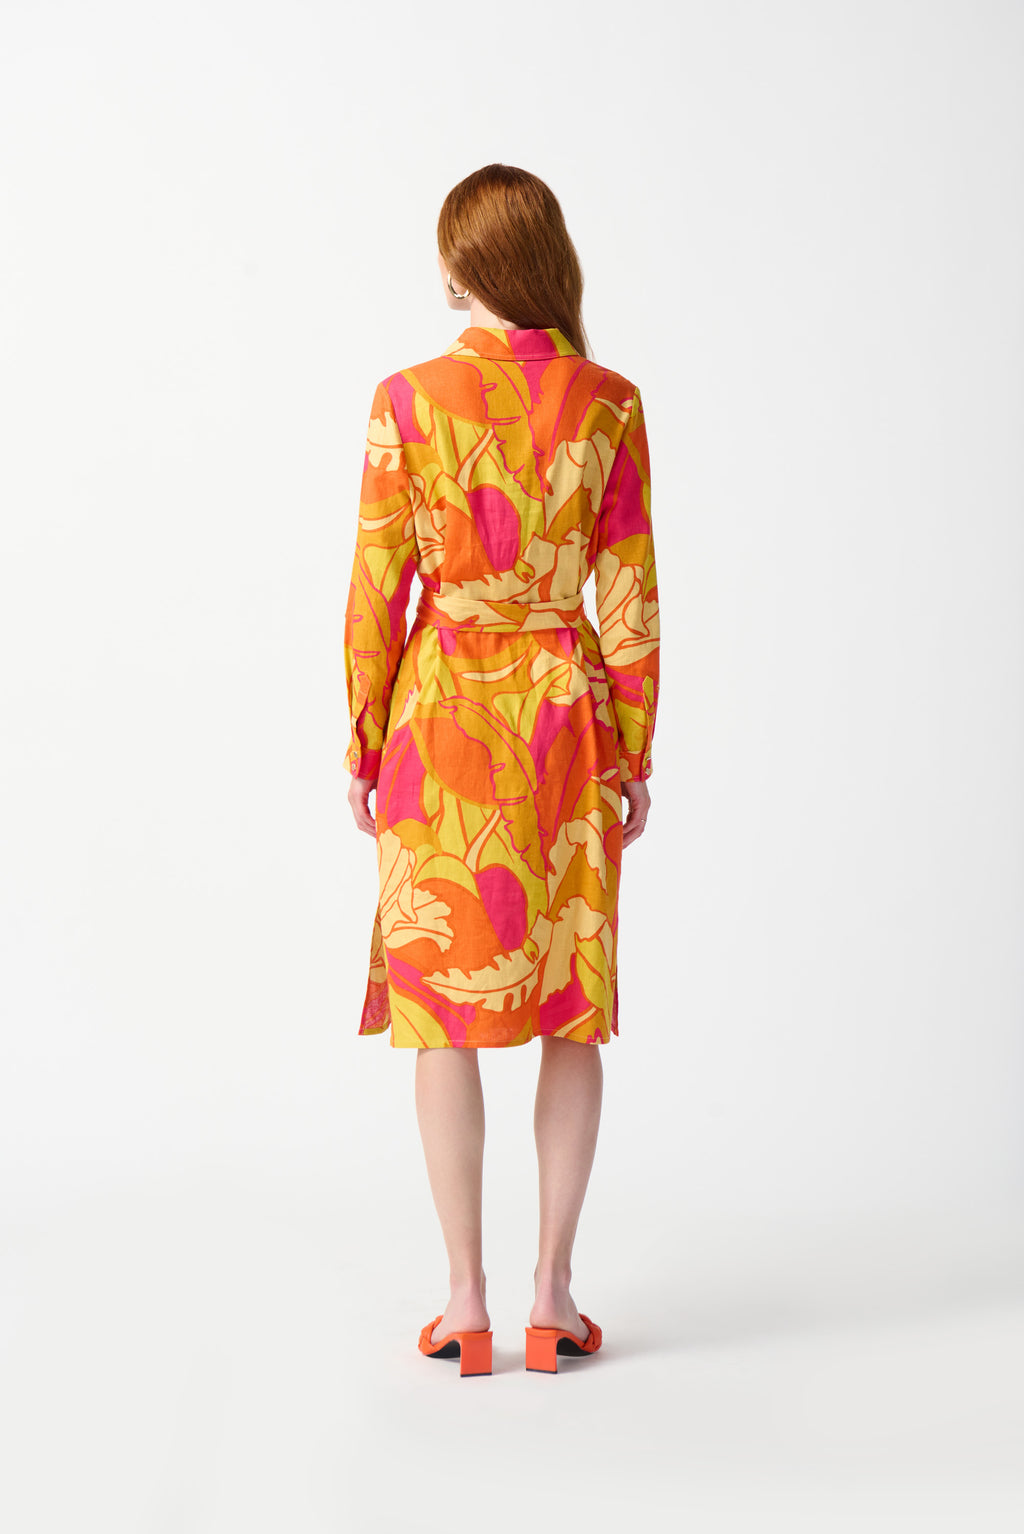 Joseph Ribkoff Pink/Multi Floral Print Shirt Dress Style 242912